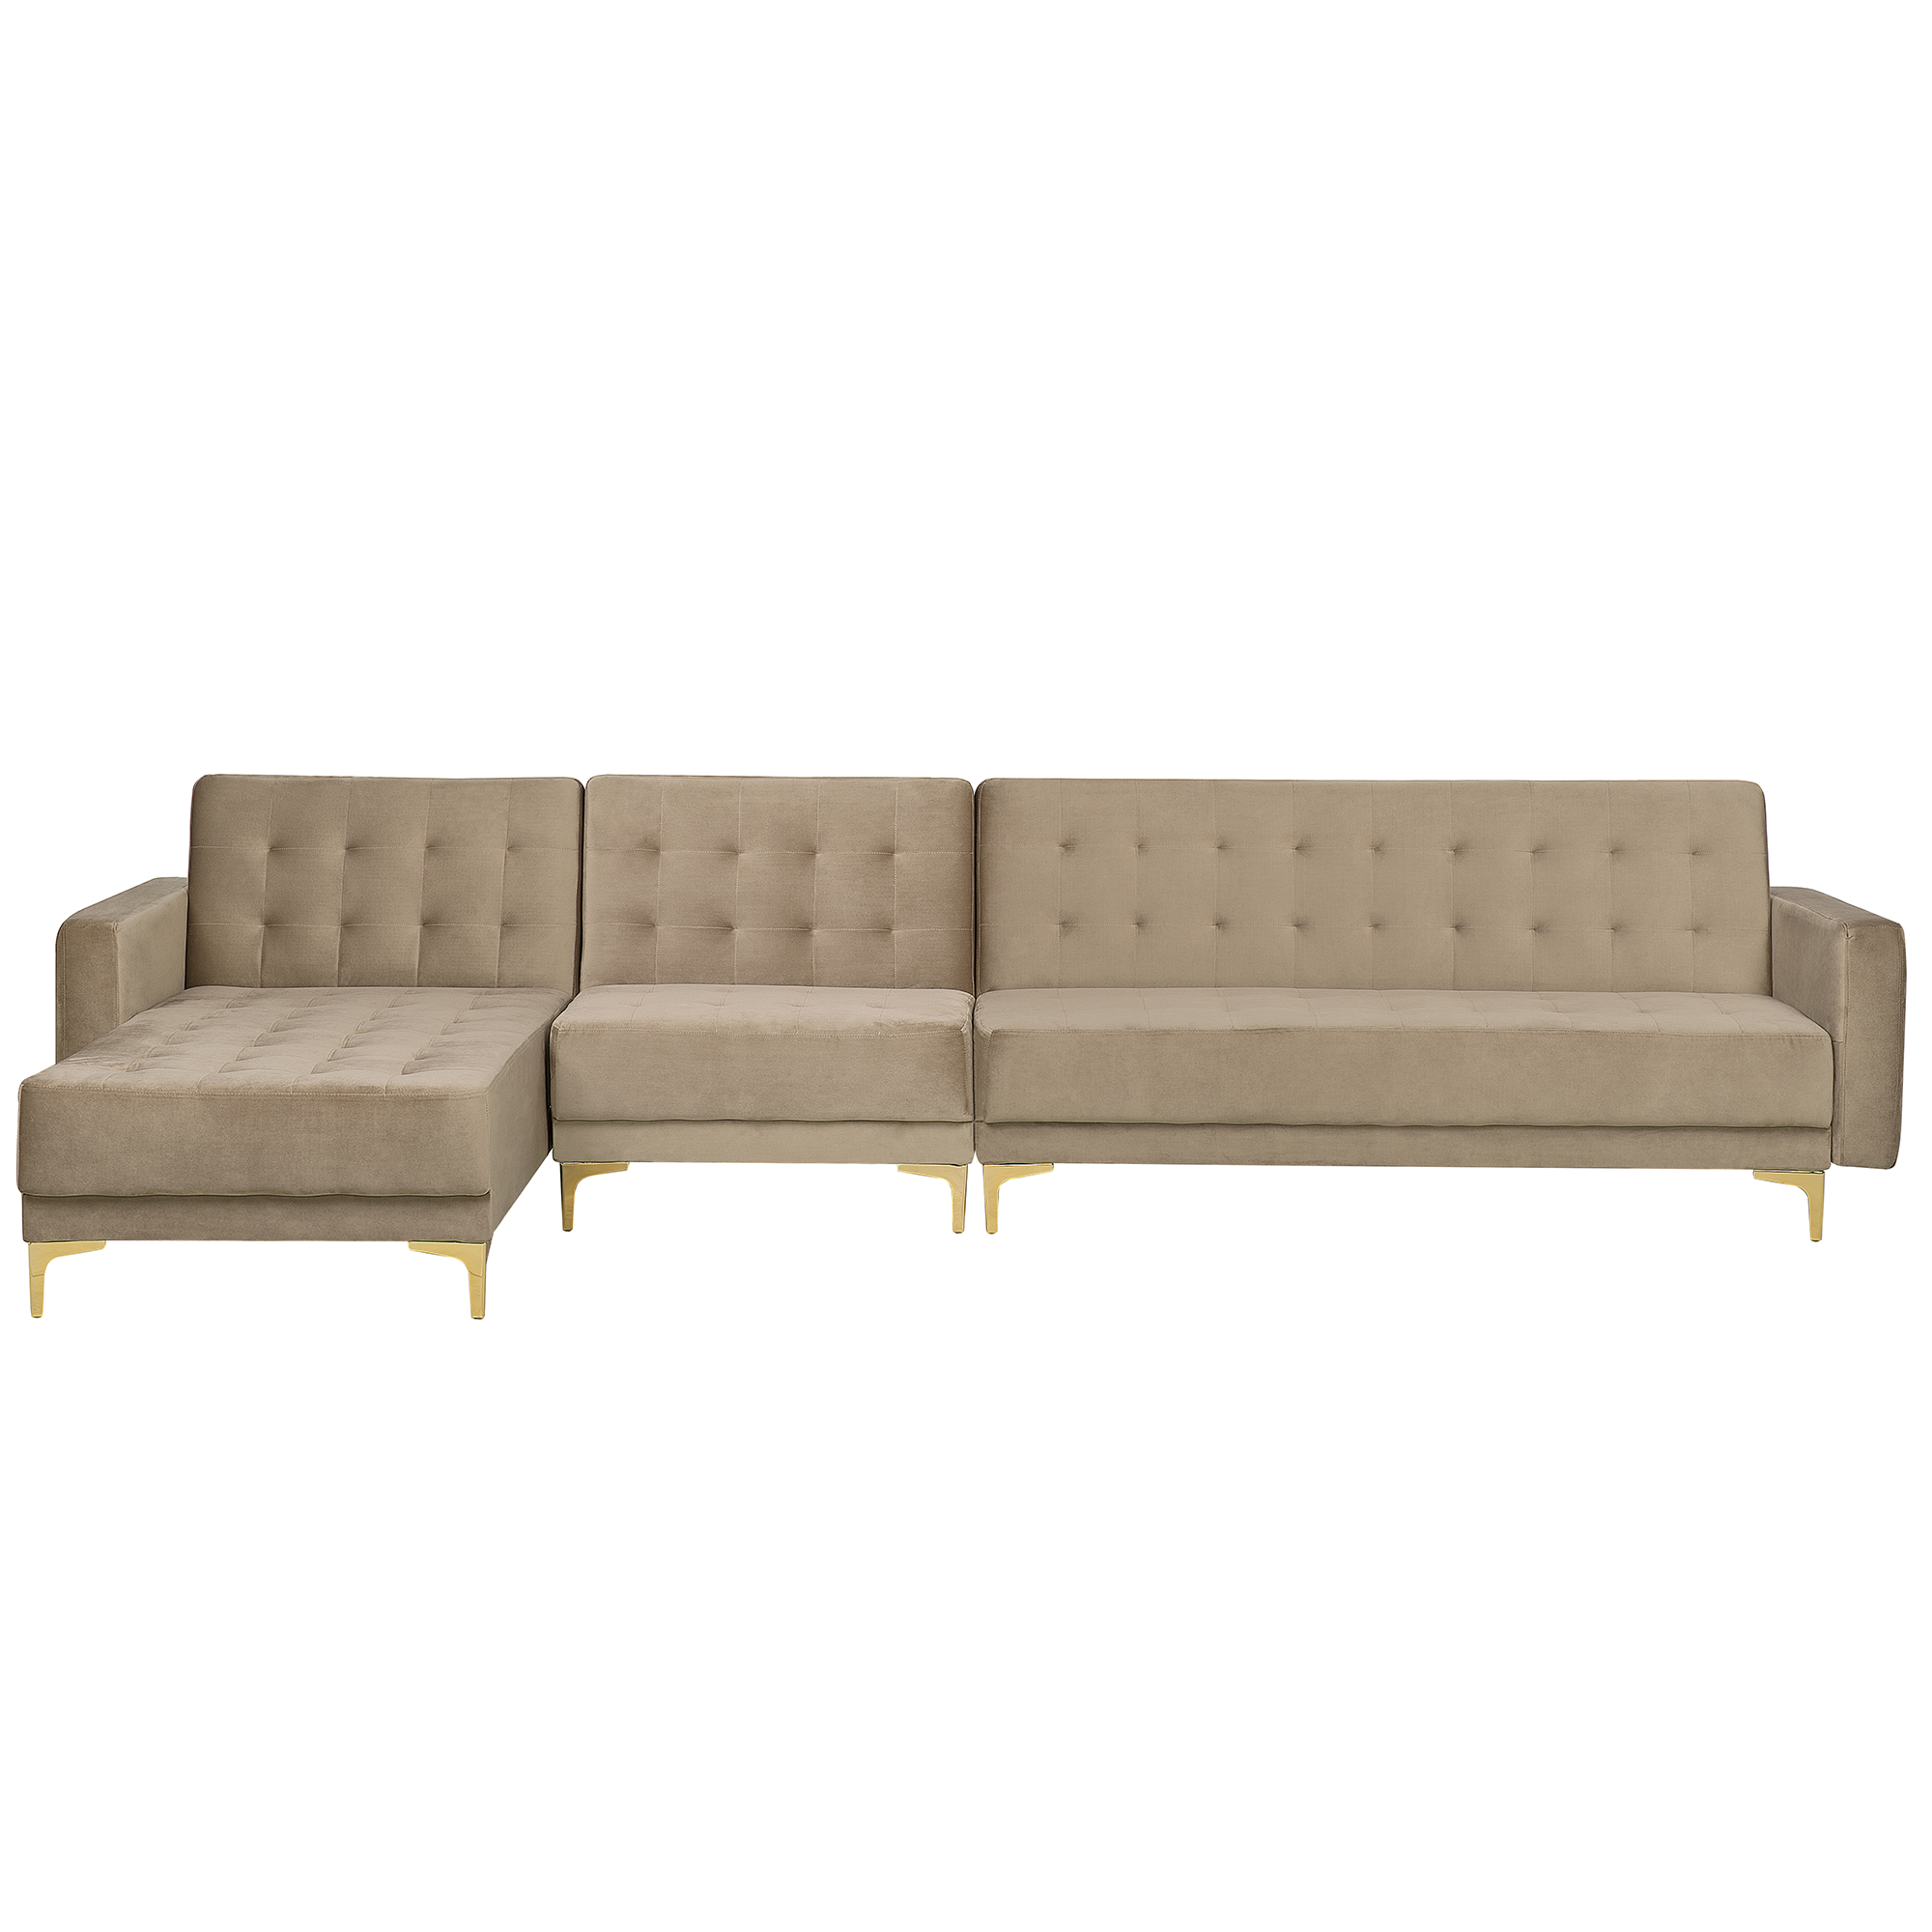 Beliani Corner Sofa Bed Beige Velvet Tufted Fabric Modern L-Shaped Modular 5 Seater Right Hand Chaise Longue